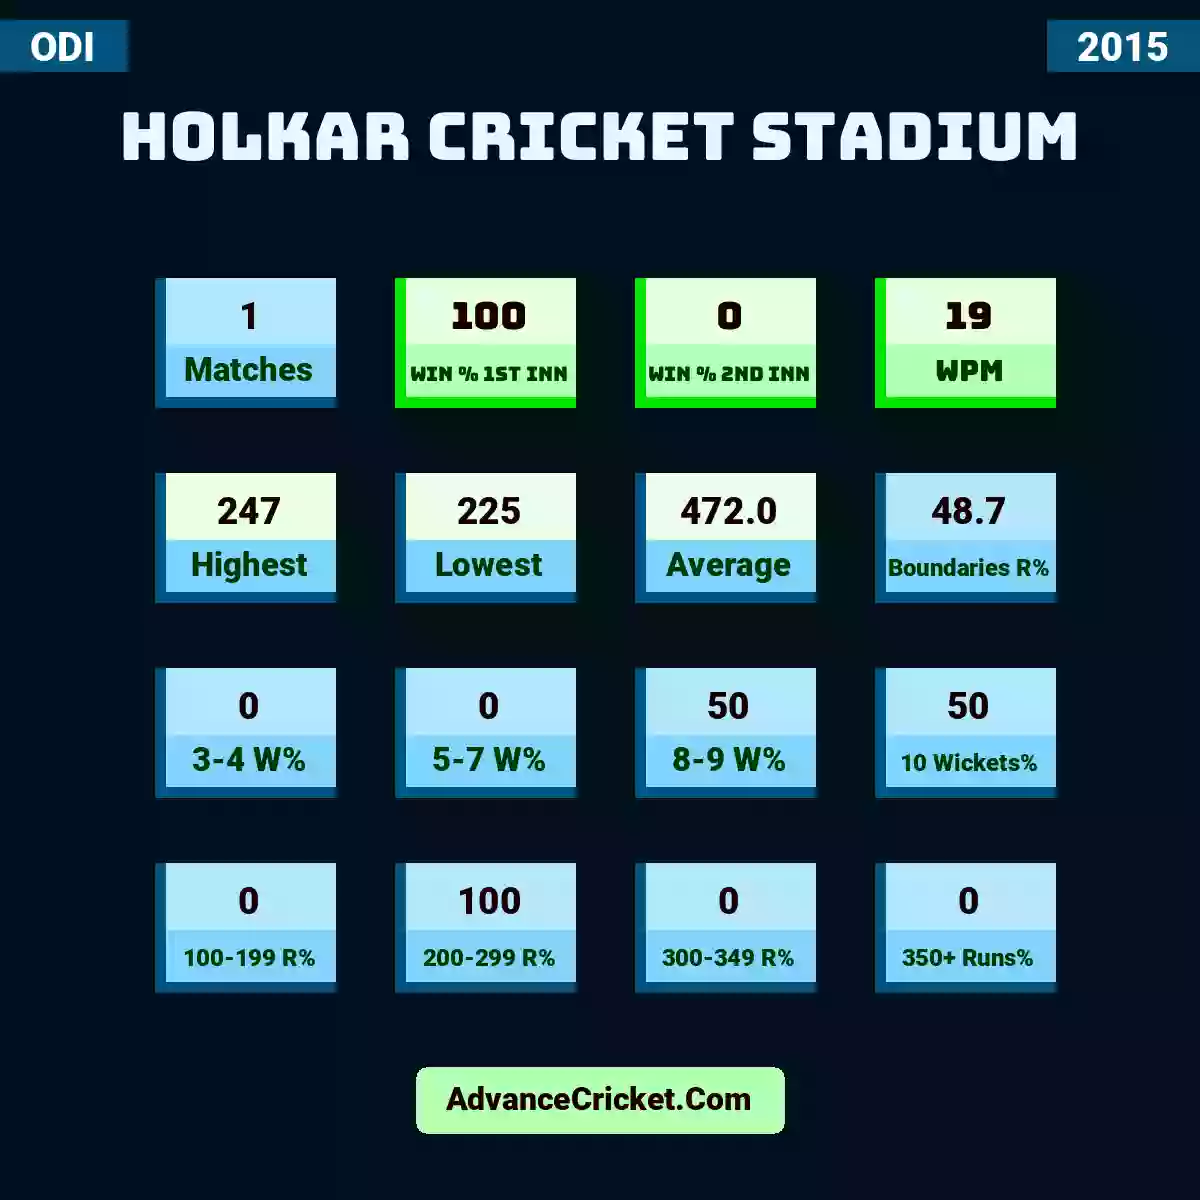 Image showing Holkar Cricket Stadium with Matches: 1, Win % 1st Inn: 100, Win % 2nd Inn: 0, WPM: 19, Highest: 247, Lowest: 225, Average: 472.0, Boundaries R%: 48.7, 3-4 W%: 0, 5-7 W%: 0, 8-9 W%: 50, 10 Wickets%: 50, 100-199 R%: 0, 200-299 R%: 100, 300-349 R%: 0, 350+ Runs%: 0.